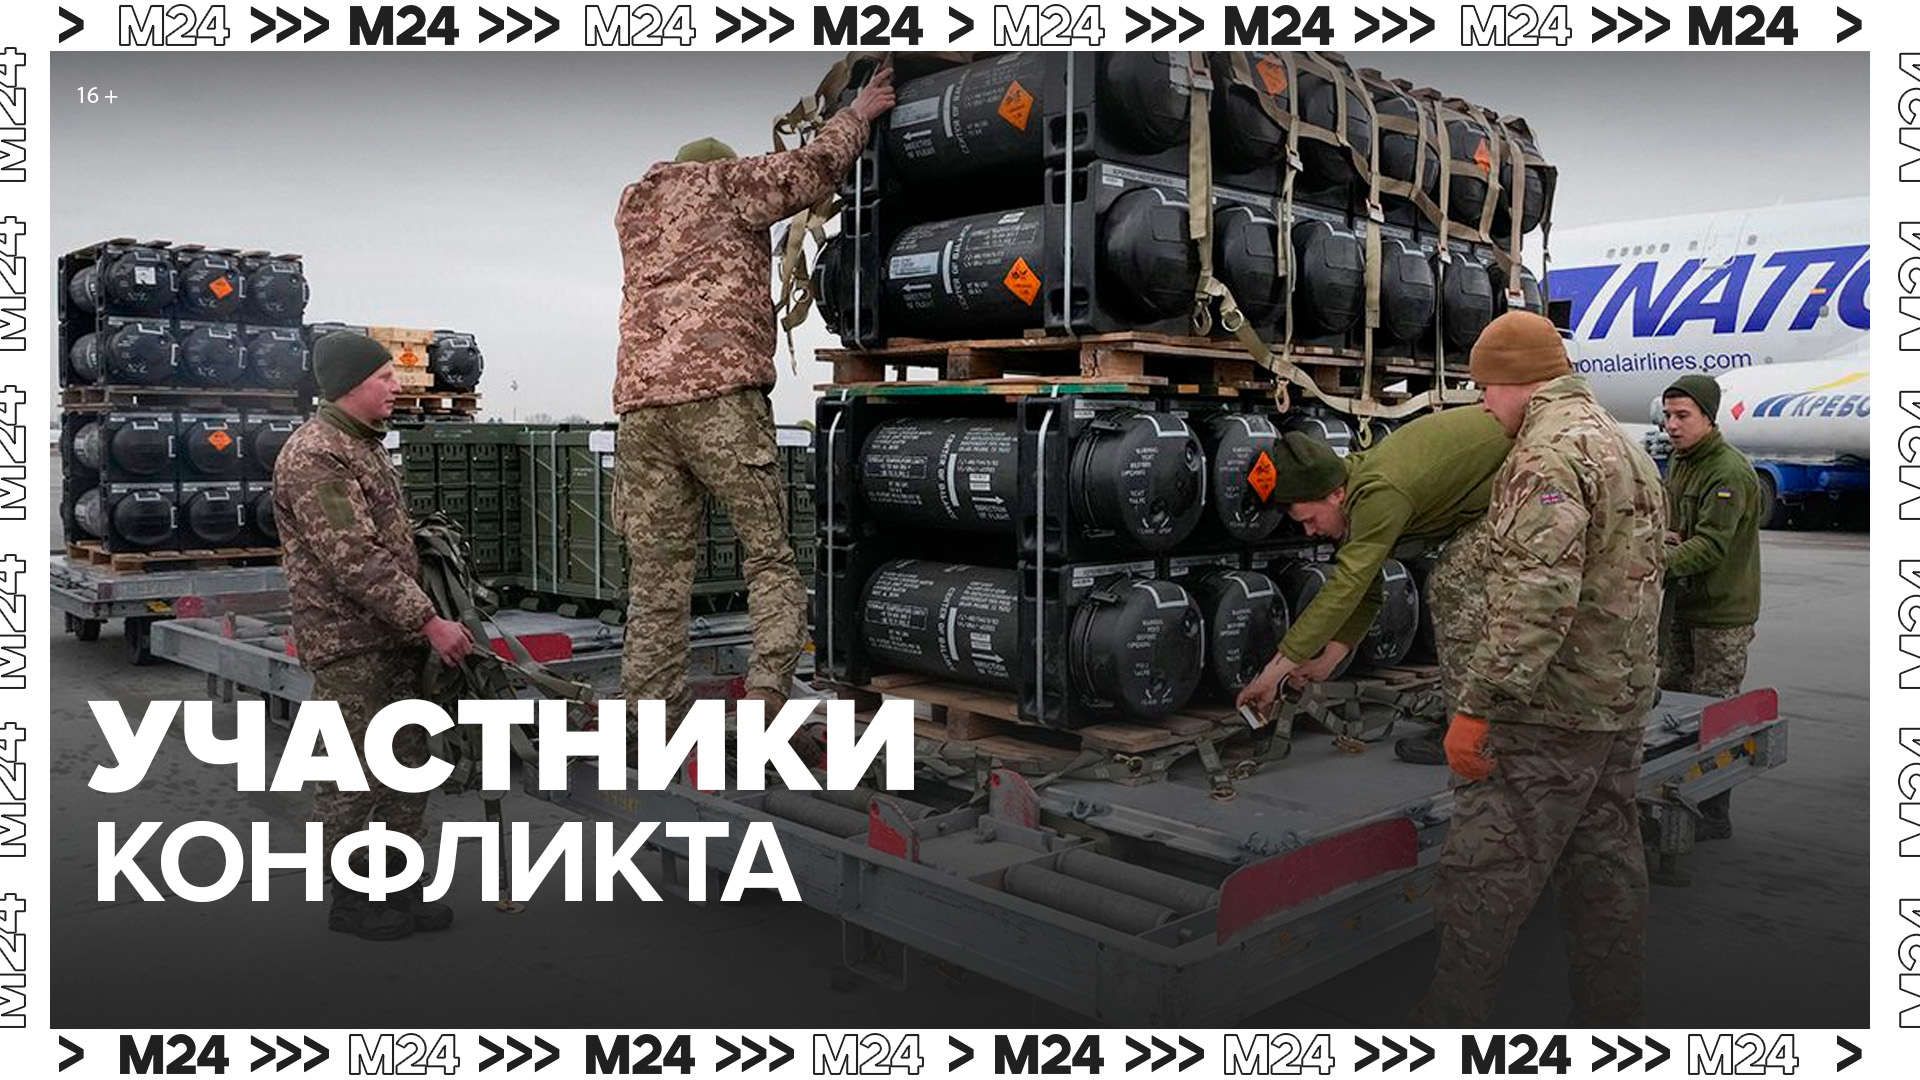 В Венгрии назвали страны НАТО и ЕС участниками конфликта на Украине из-за поставок оружия - Москва 2